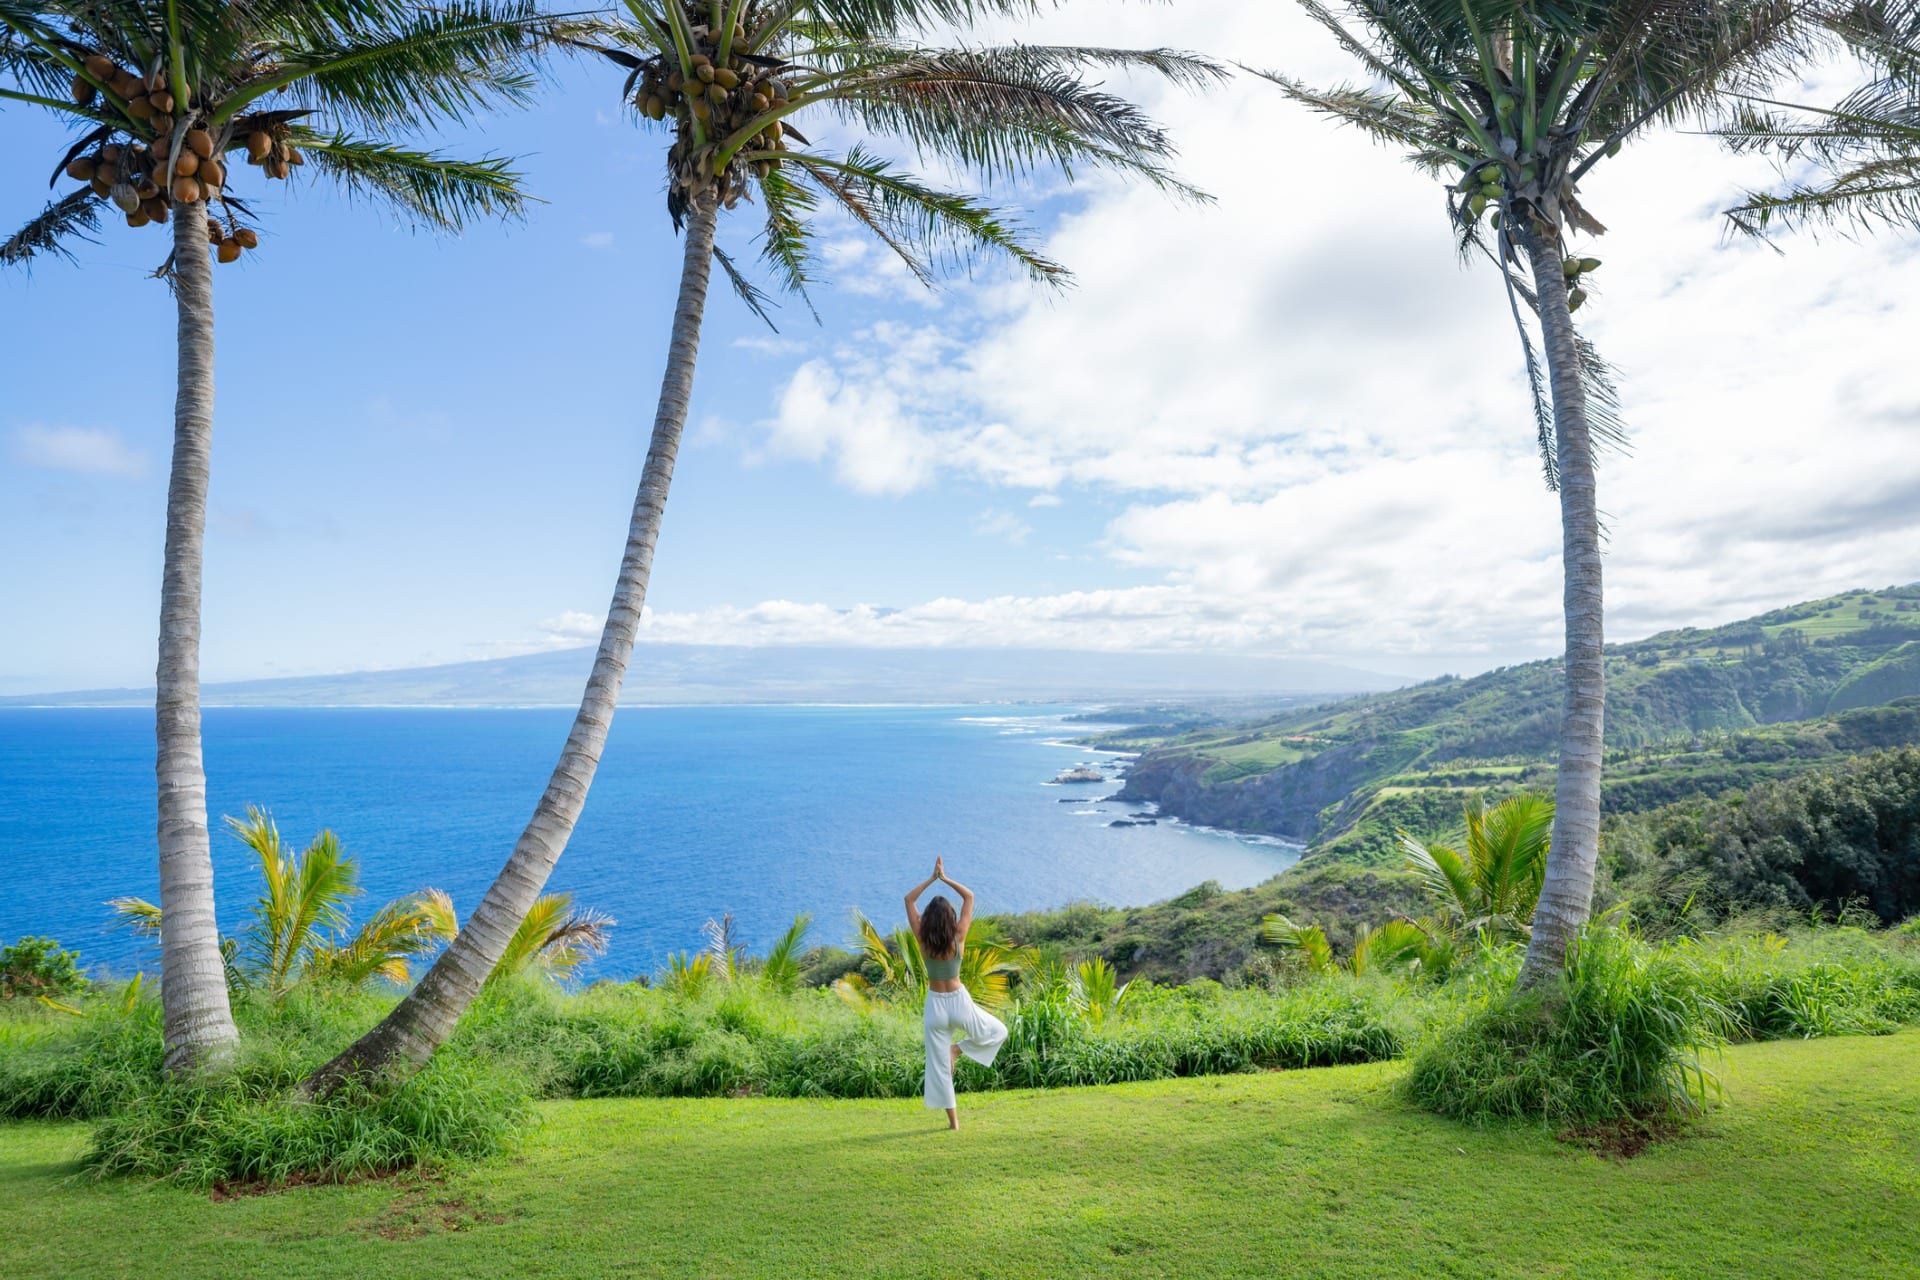 Kauai Yoga Festival & Peace Meditation Summit — October 7th